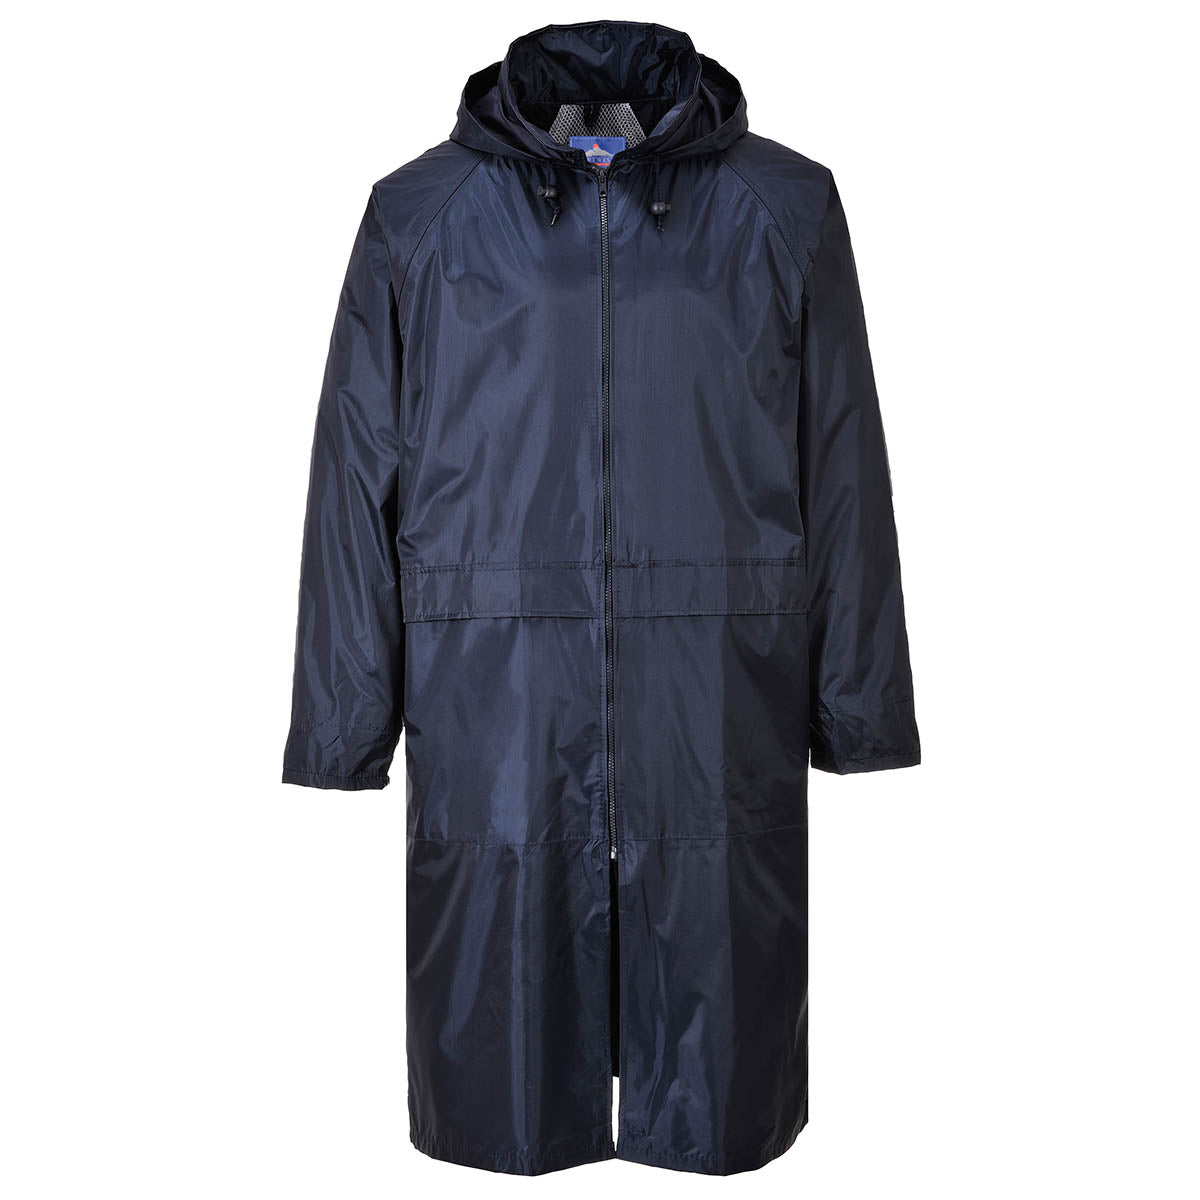 Portwest S438 classic rain coat navy